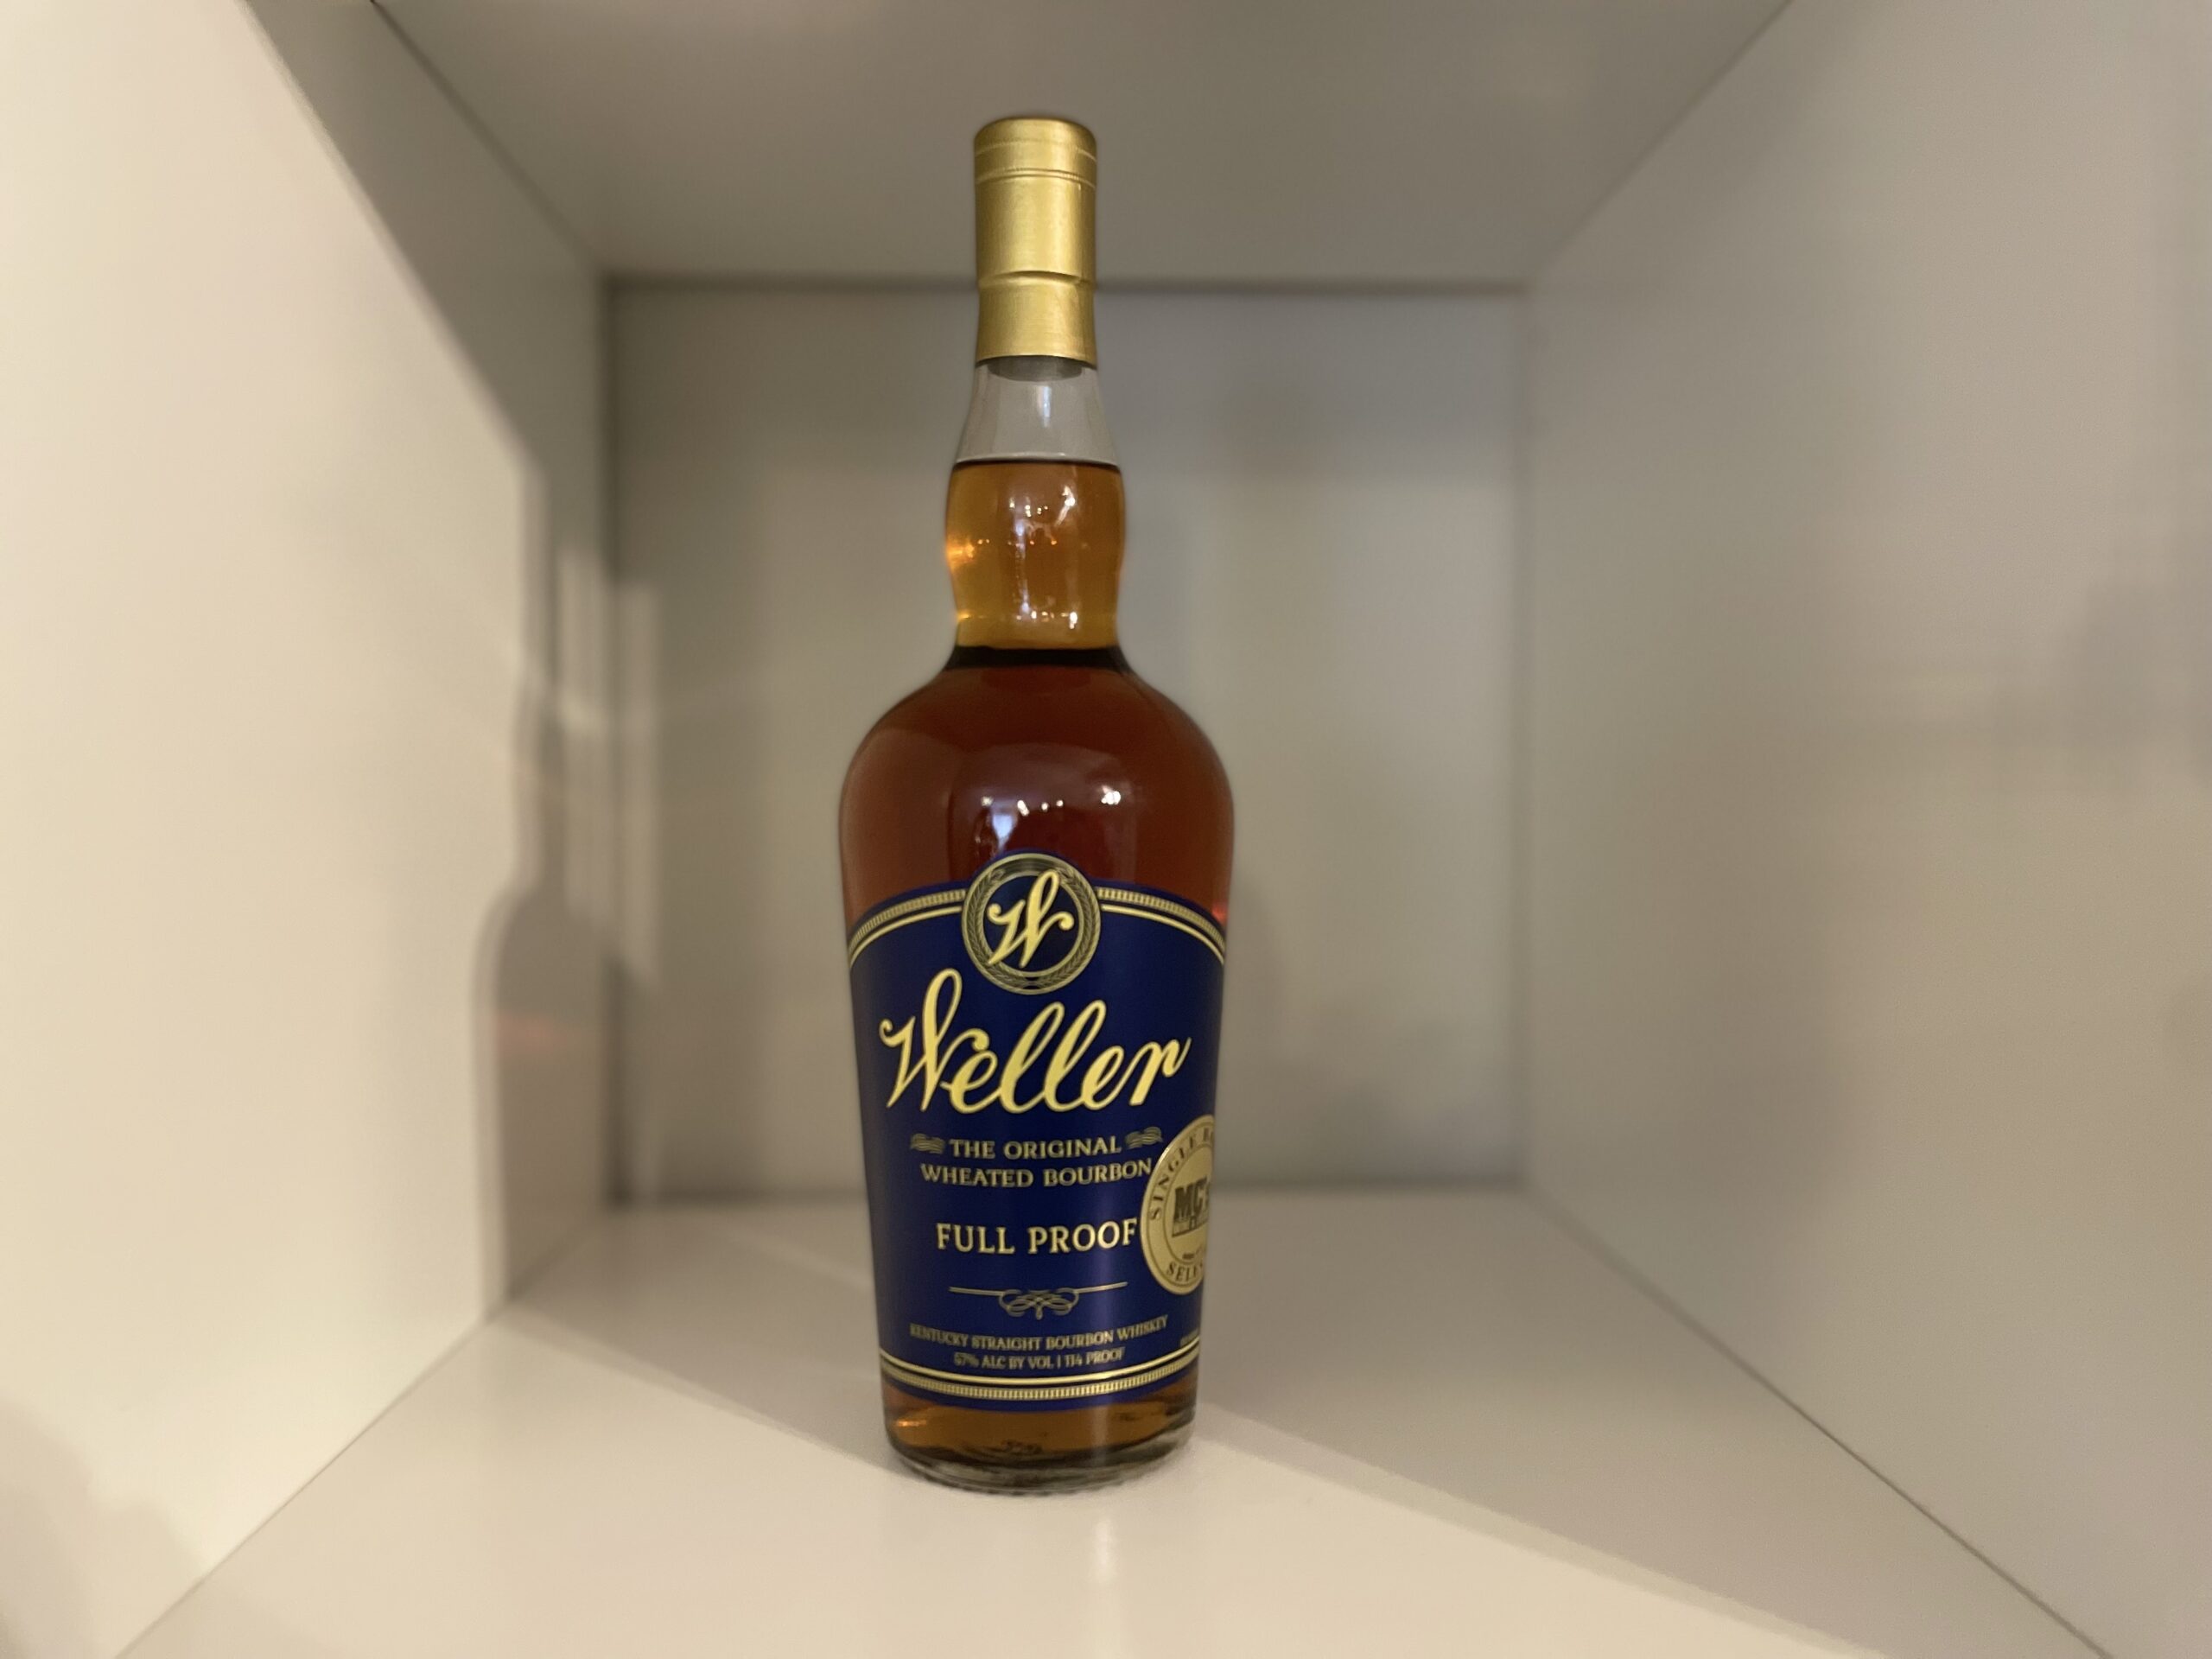 Uncover The Secret To Scoring W.L. Weller Full Proof Bourbon For Under $400!